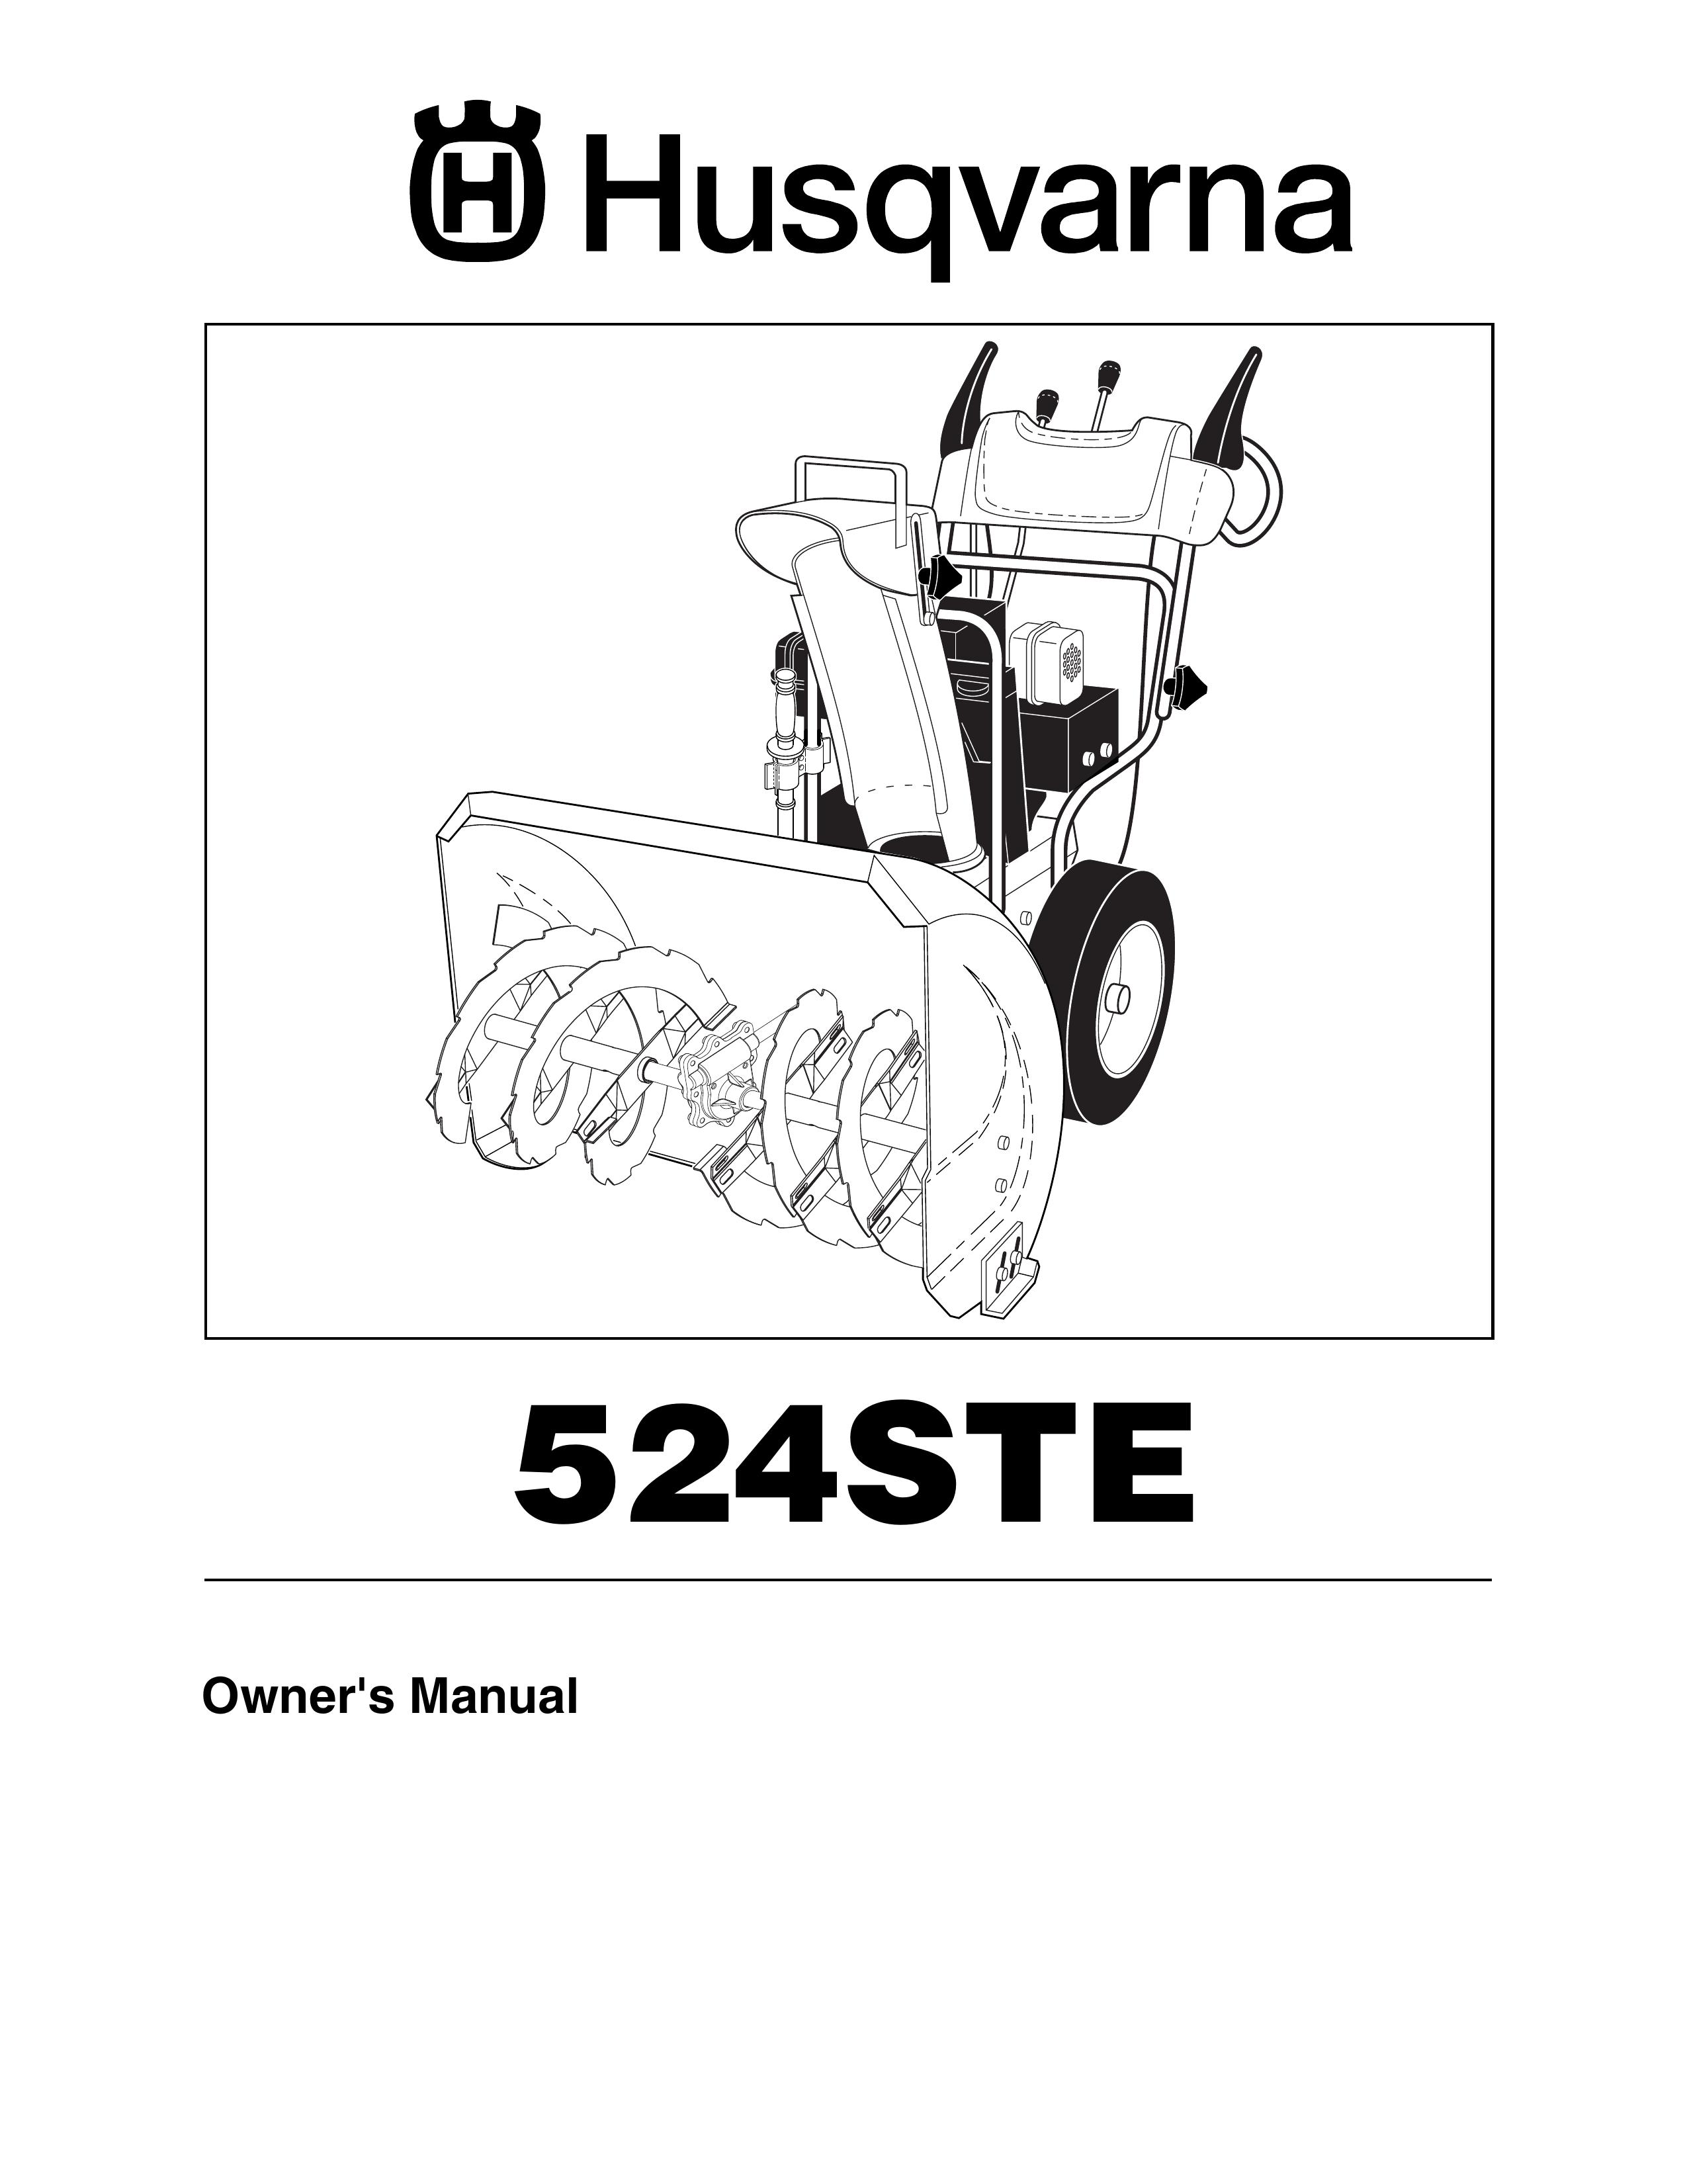 Husqvarna 524STE Snow Blower User Manual